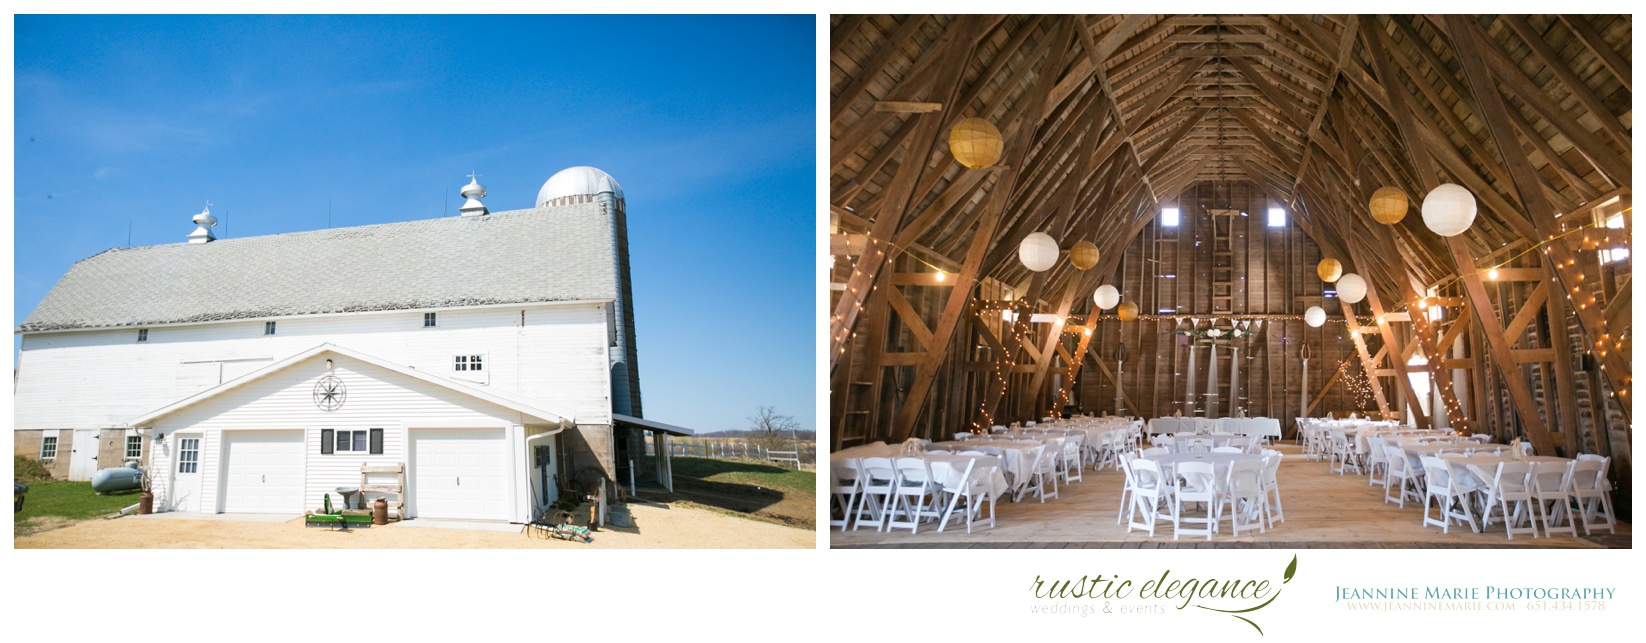 The Still Barn, Wisconsin Barn wedding, Jeannine Marie Photography, Rustic Elegance, Barn Wedding Planners_0796